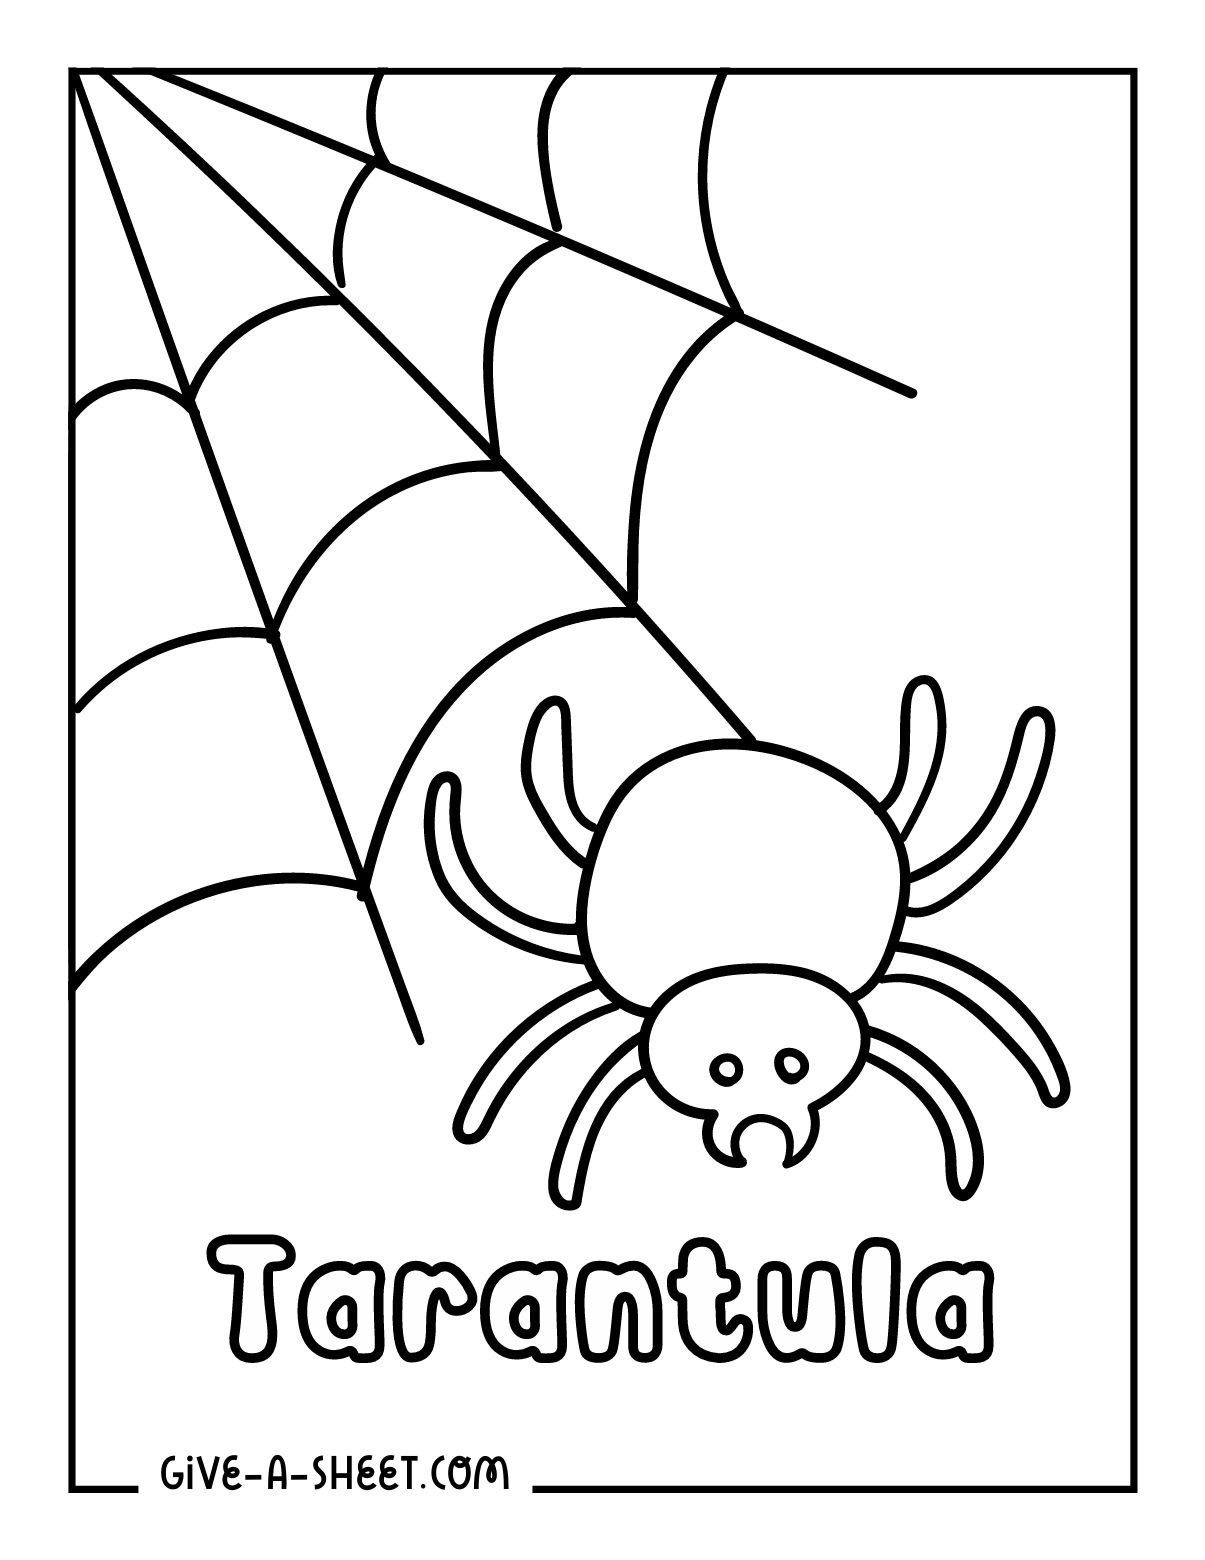 Easy tarantula coloring sheets for little kids.